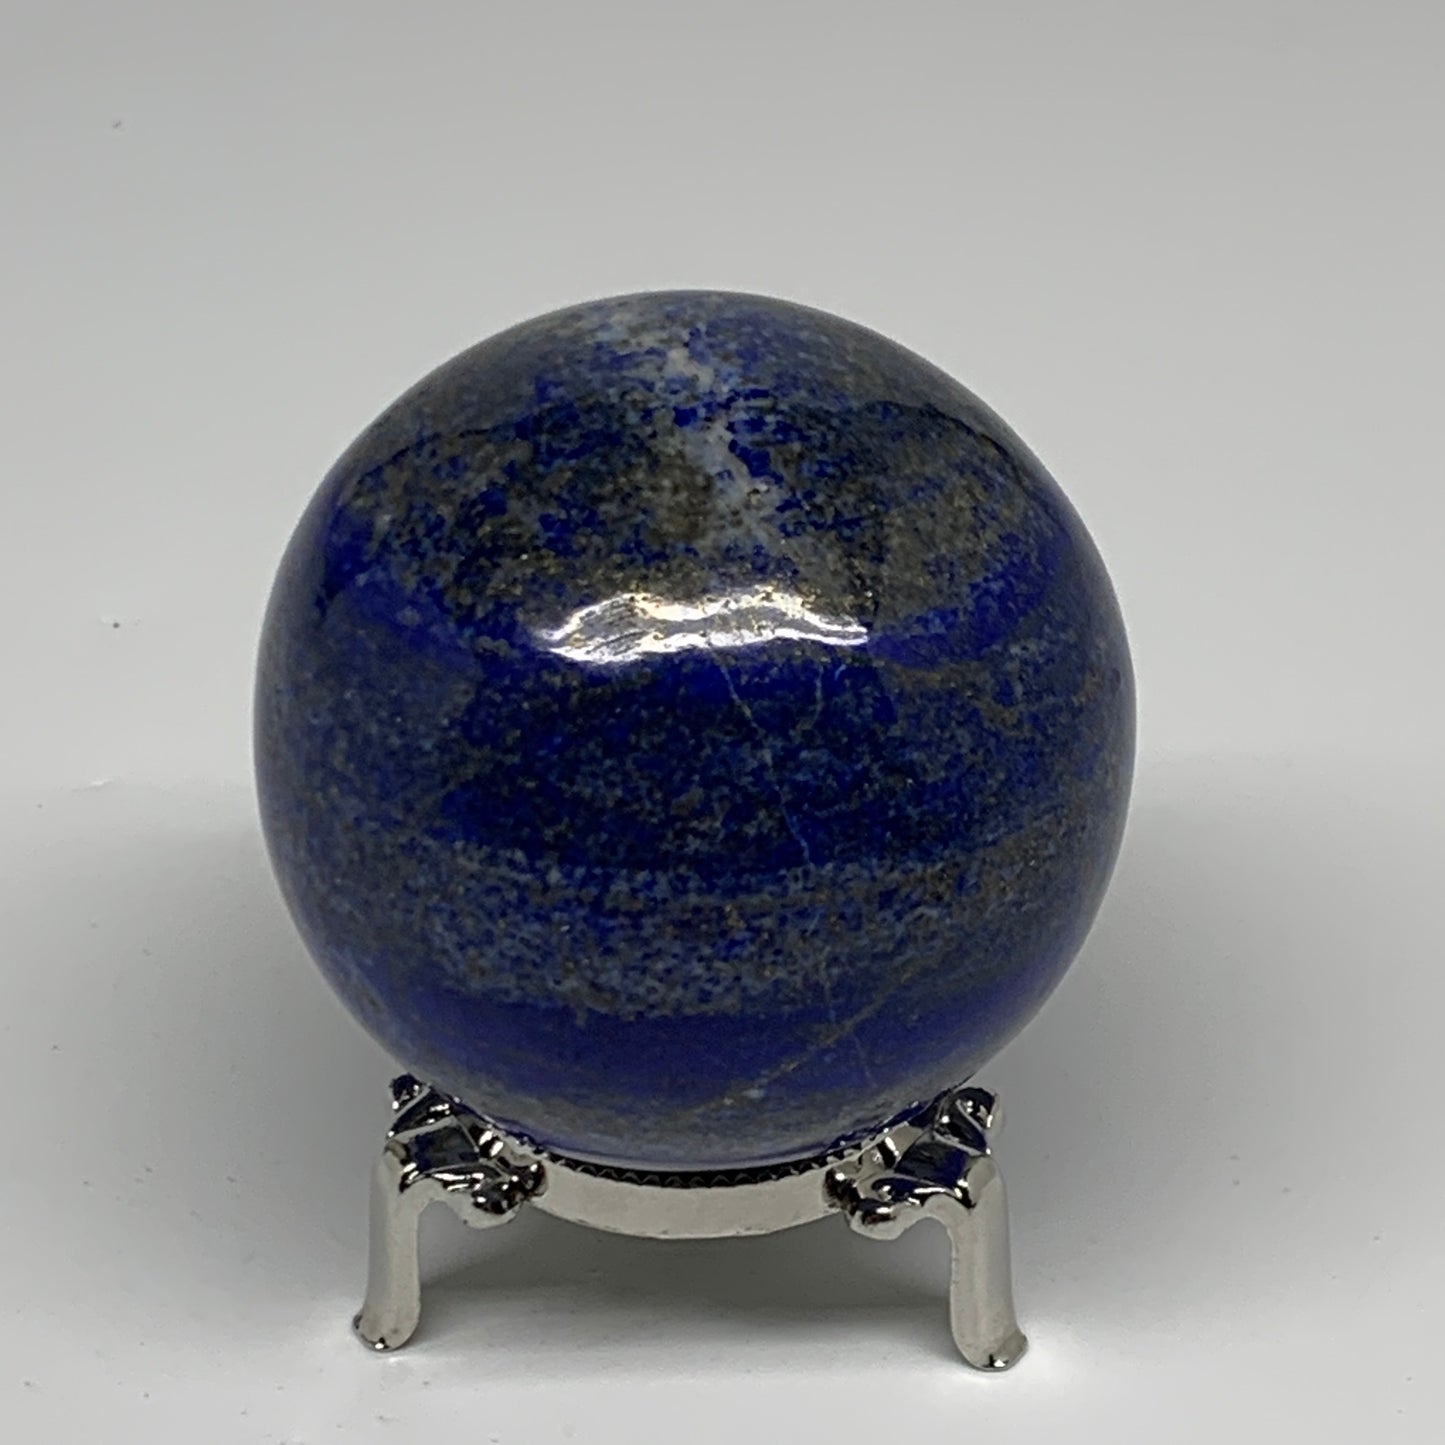 1.09 lbs, 2.7" (68mm), Lapis Lazuli Sphere Ball Gemstone @Afghanistan, B33335